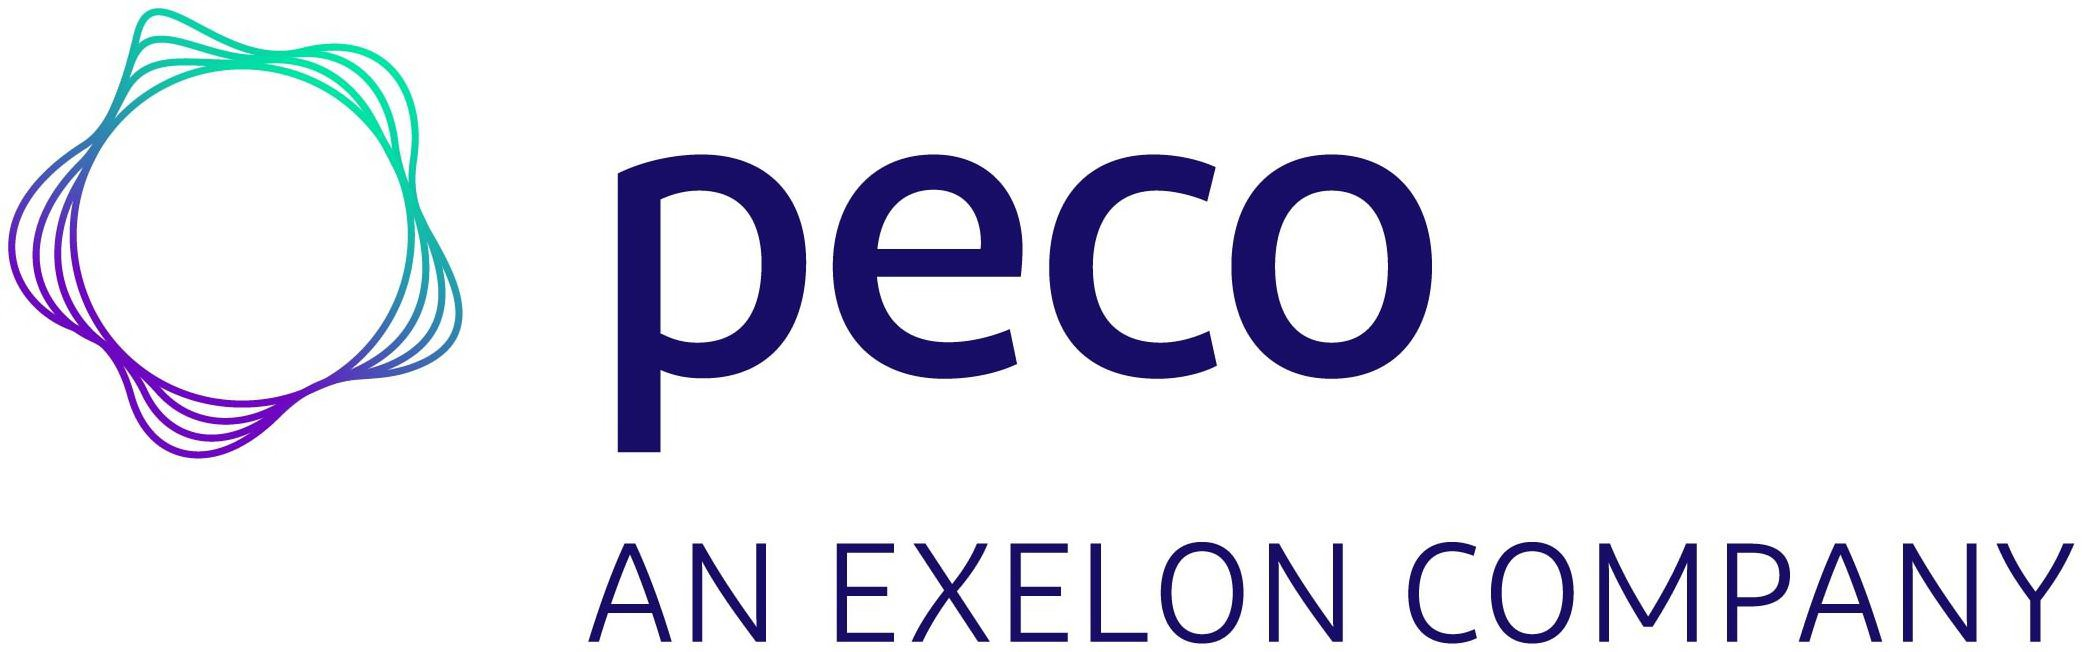  PECO AN EXELON COMPANY